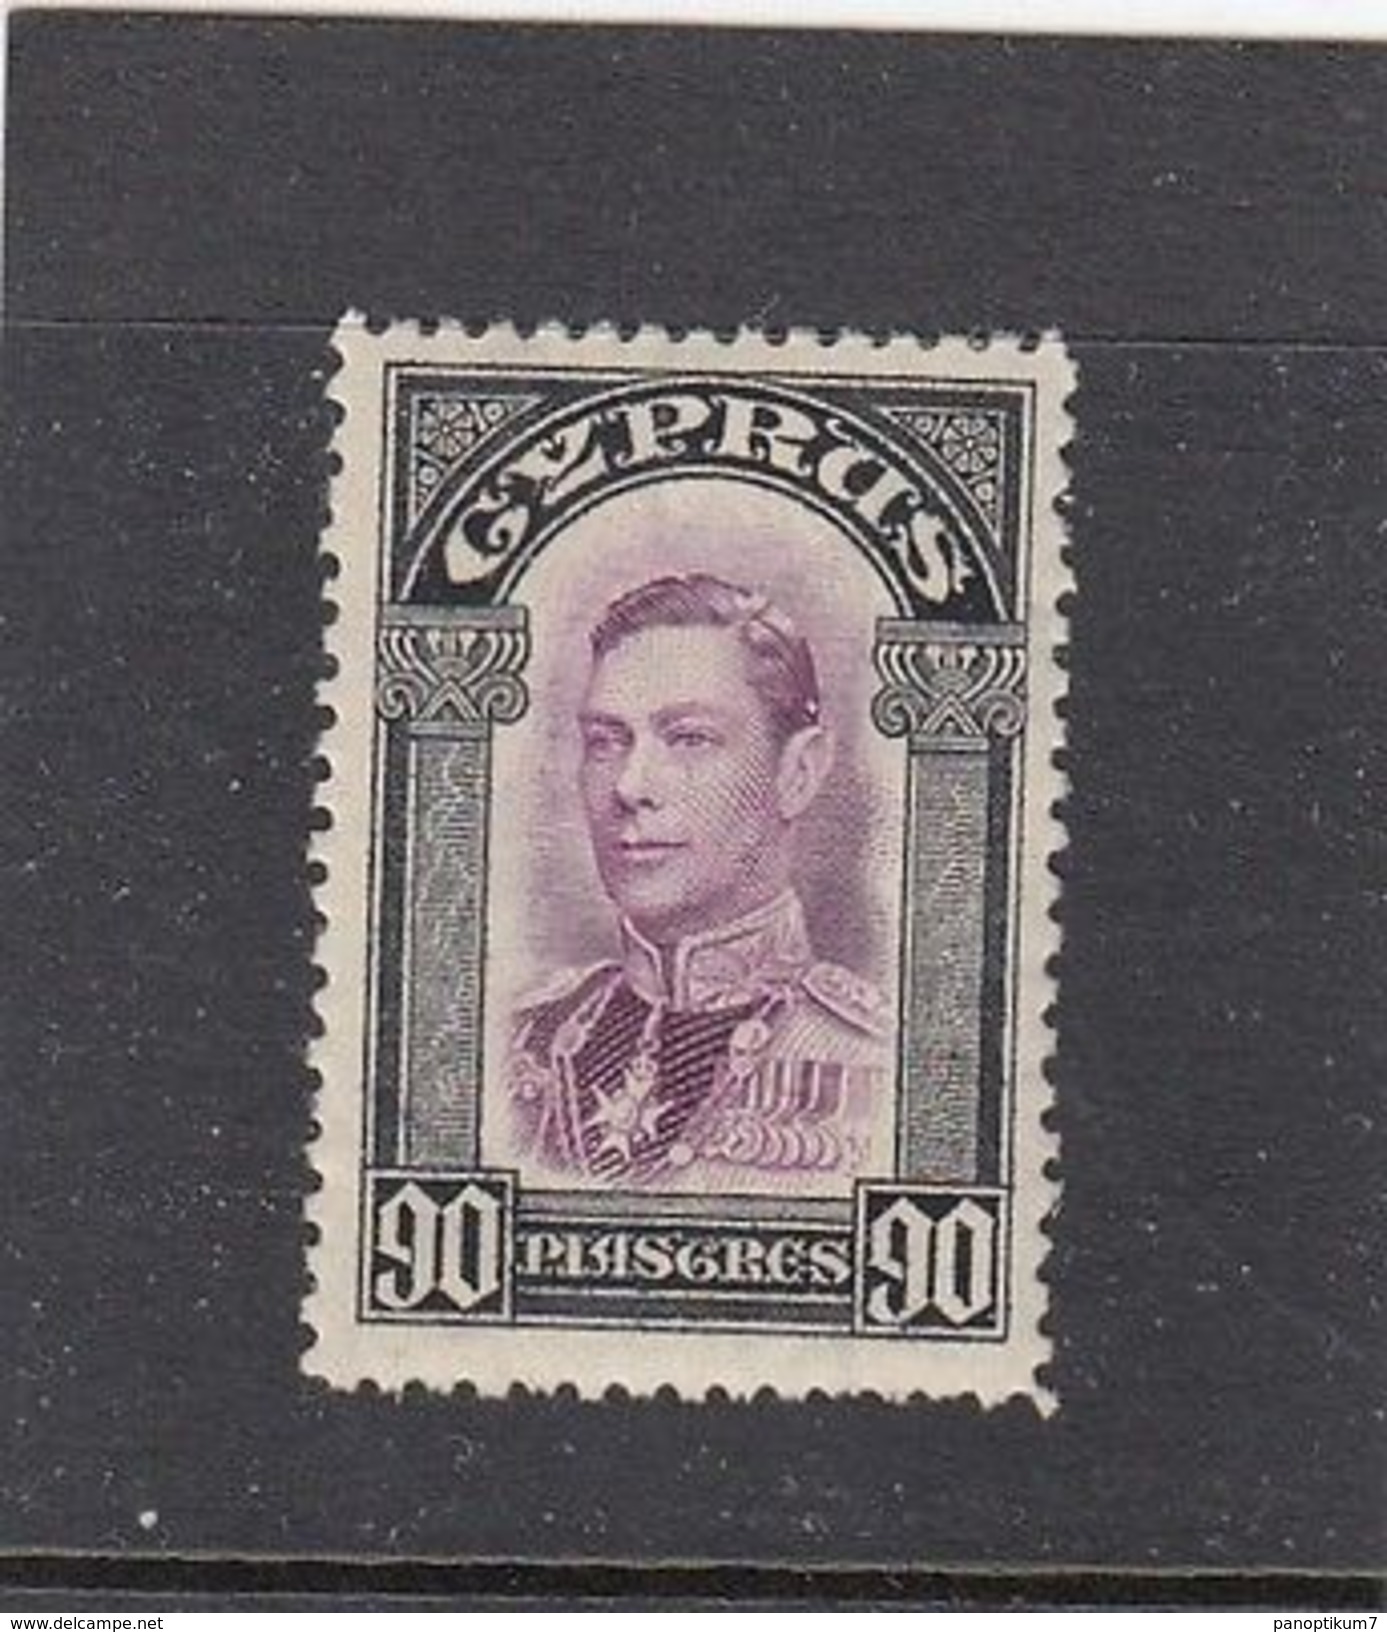 Cyprus,1938/51,King George VI,90 Piastres,Michel Nr.153,MNH - Chypre (...-1960)